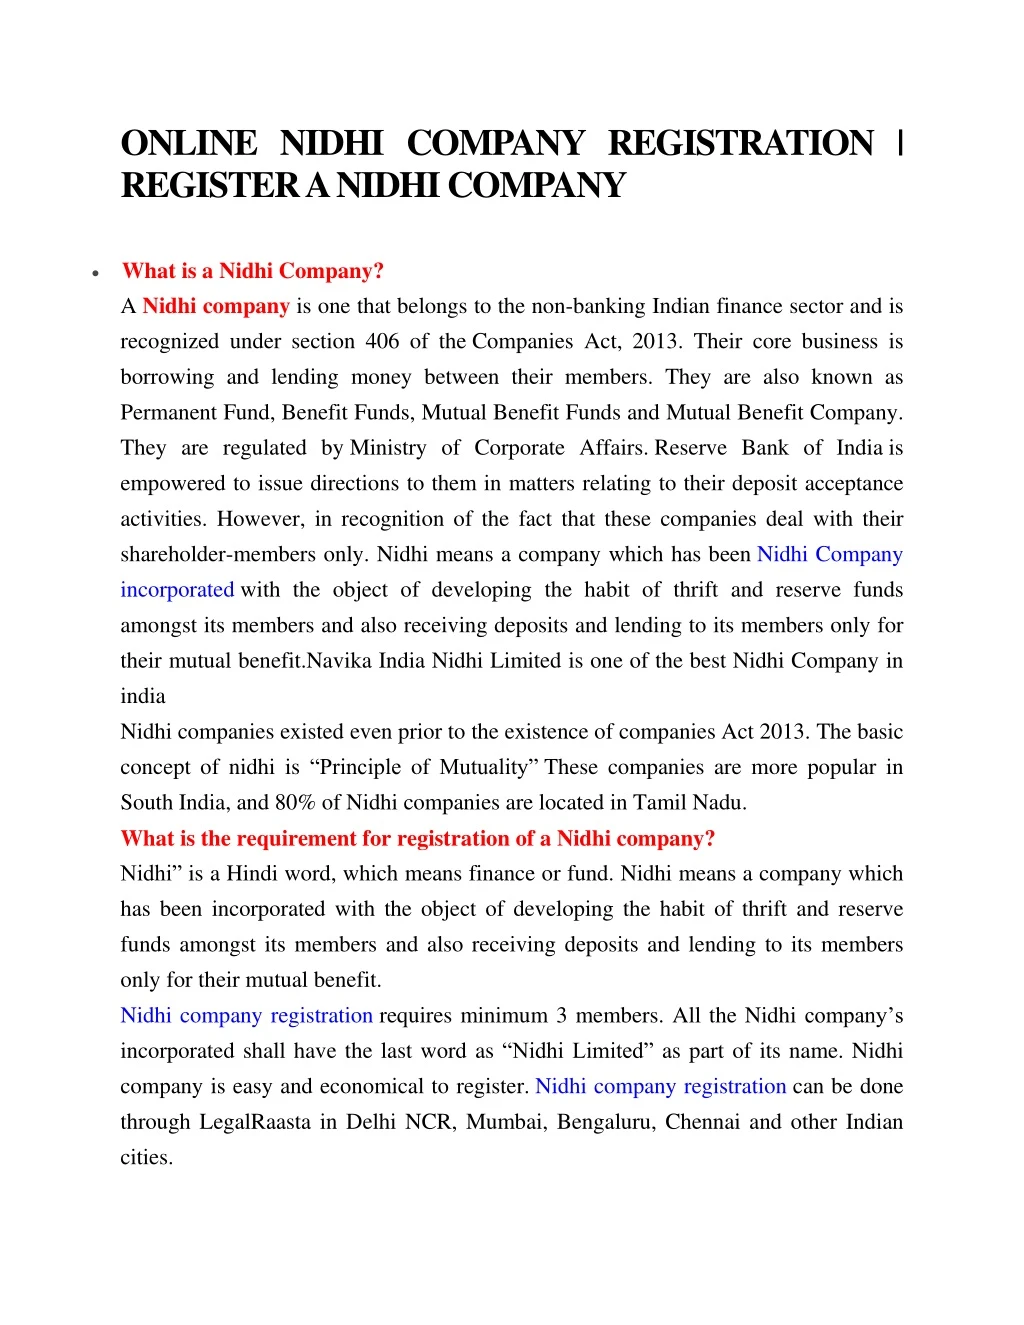 online nidhi company registration register